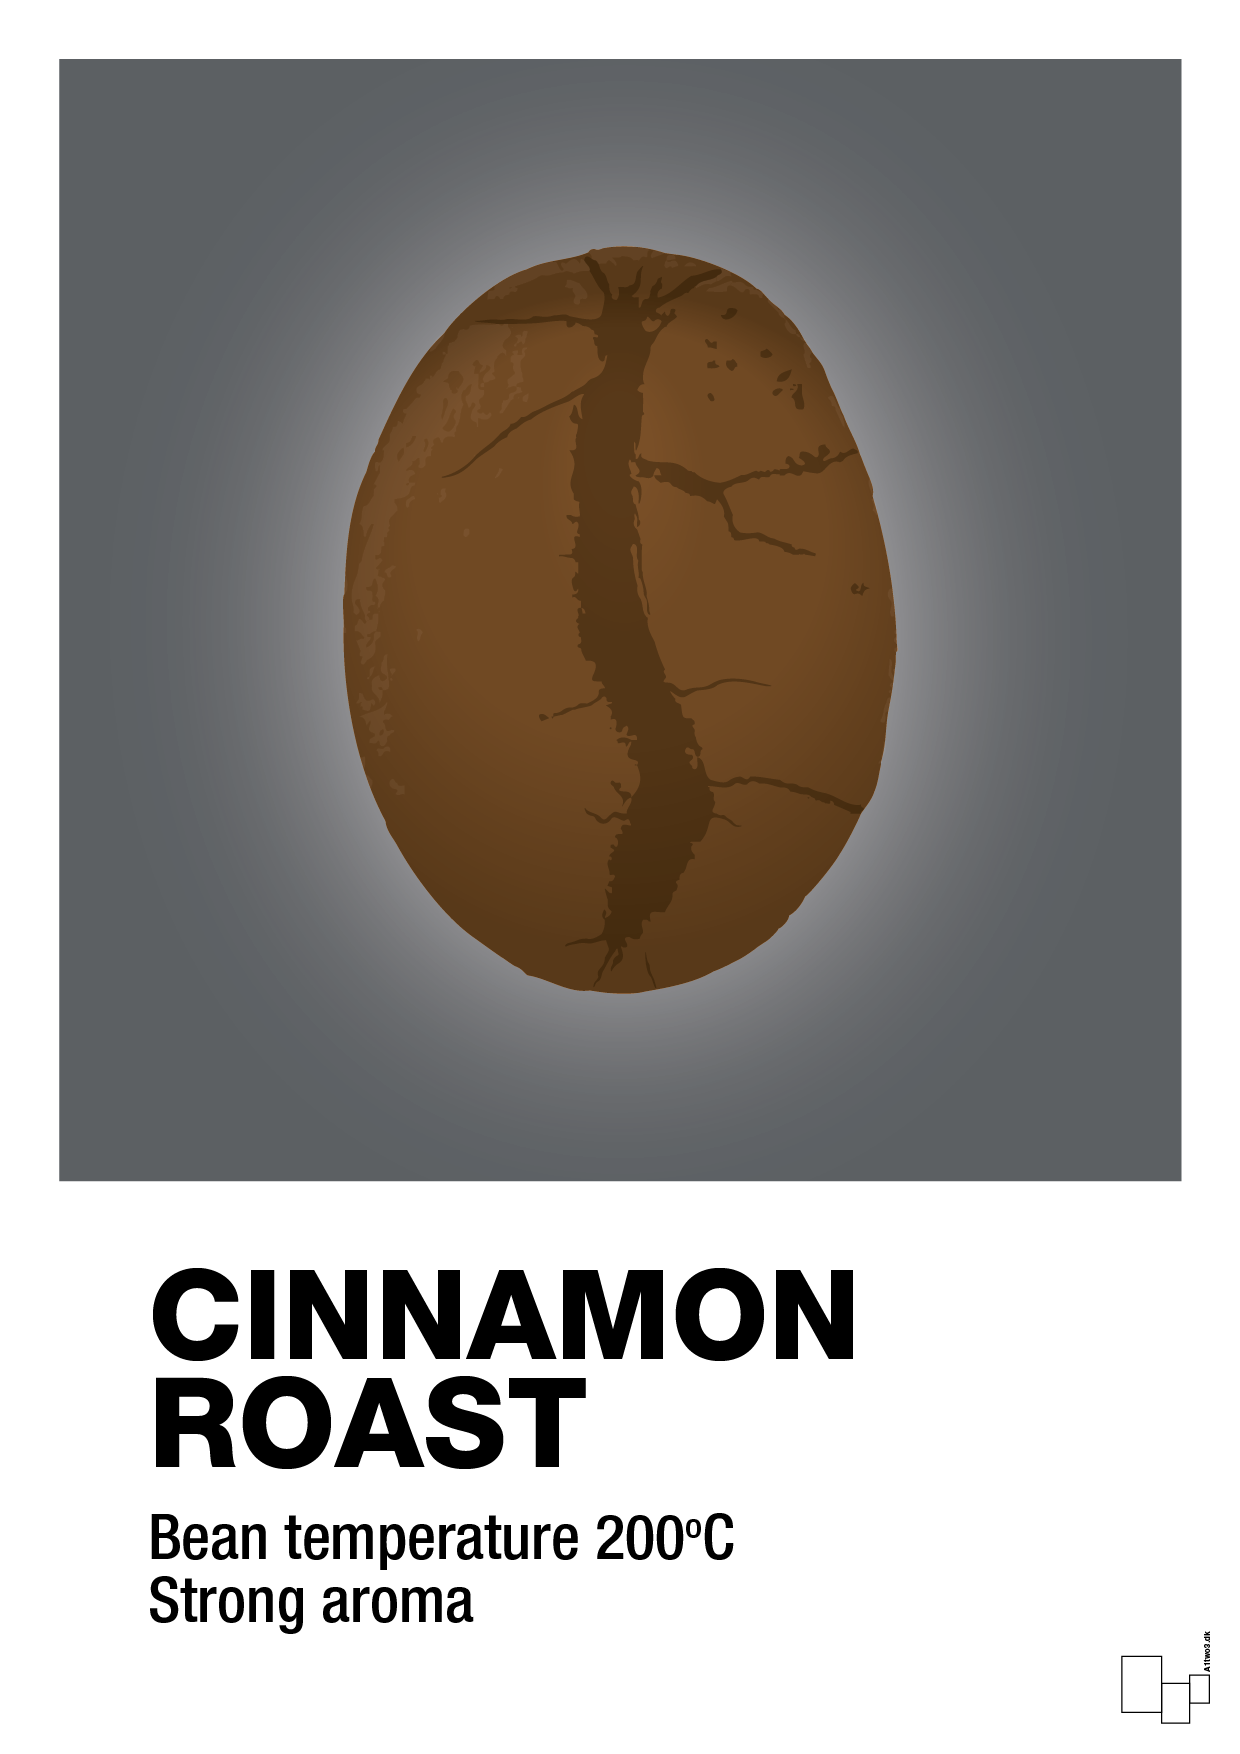 cinnamom roast - Plakat med Mad & Drikke i Graphic Charcoal